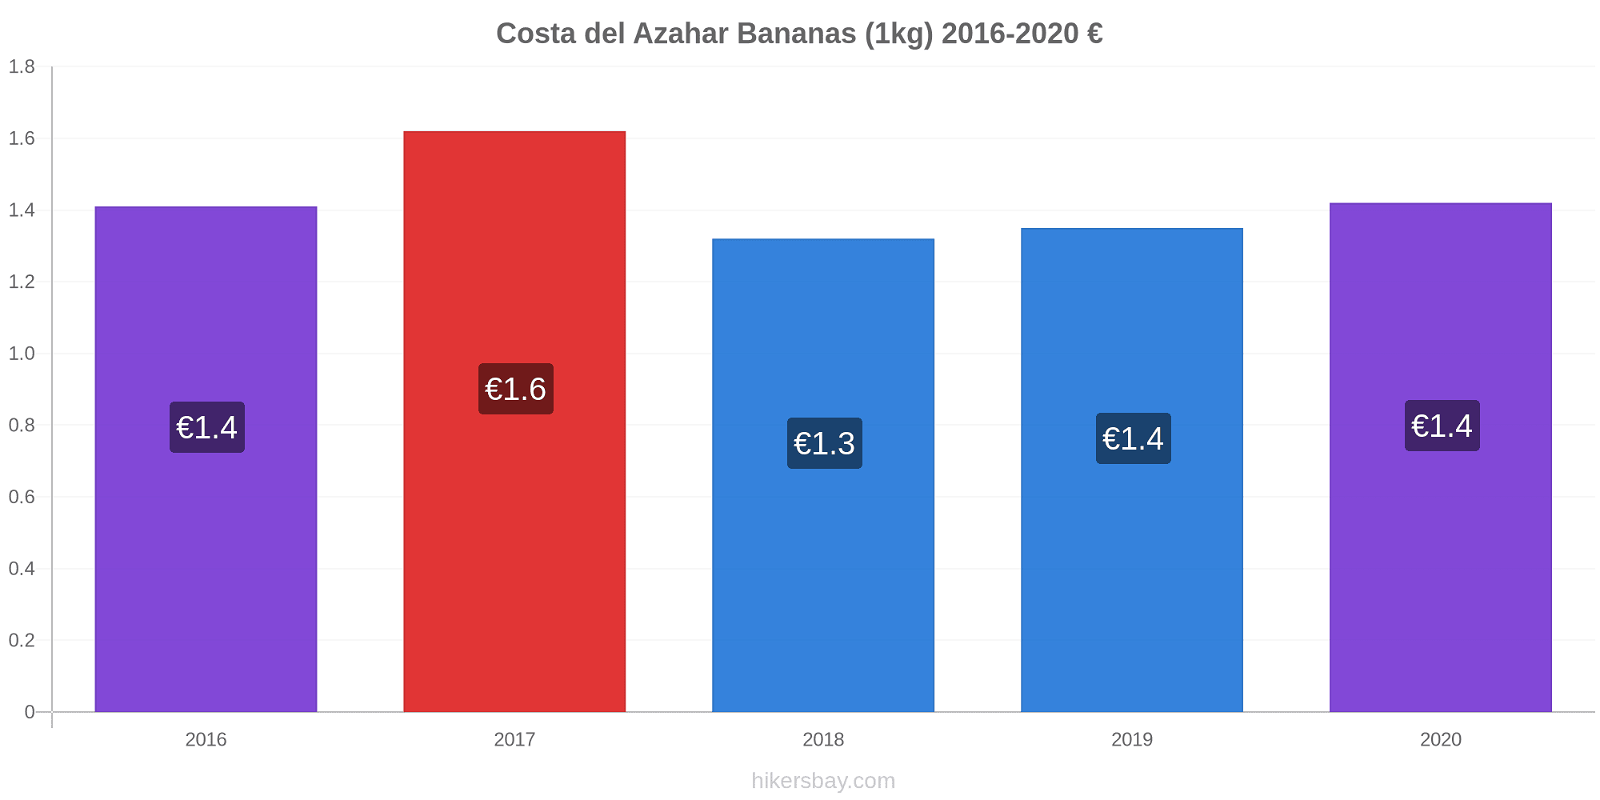 Costa del Azahar price changes Bananas (1kg) hikersbay.com